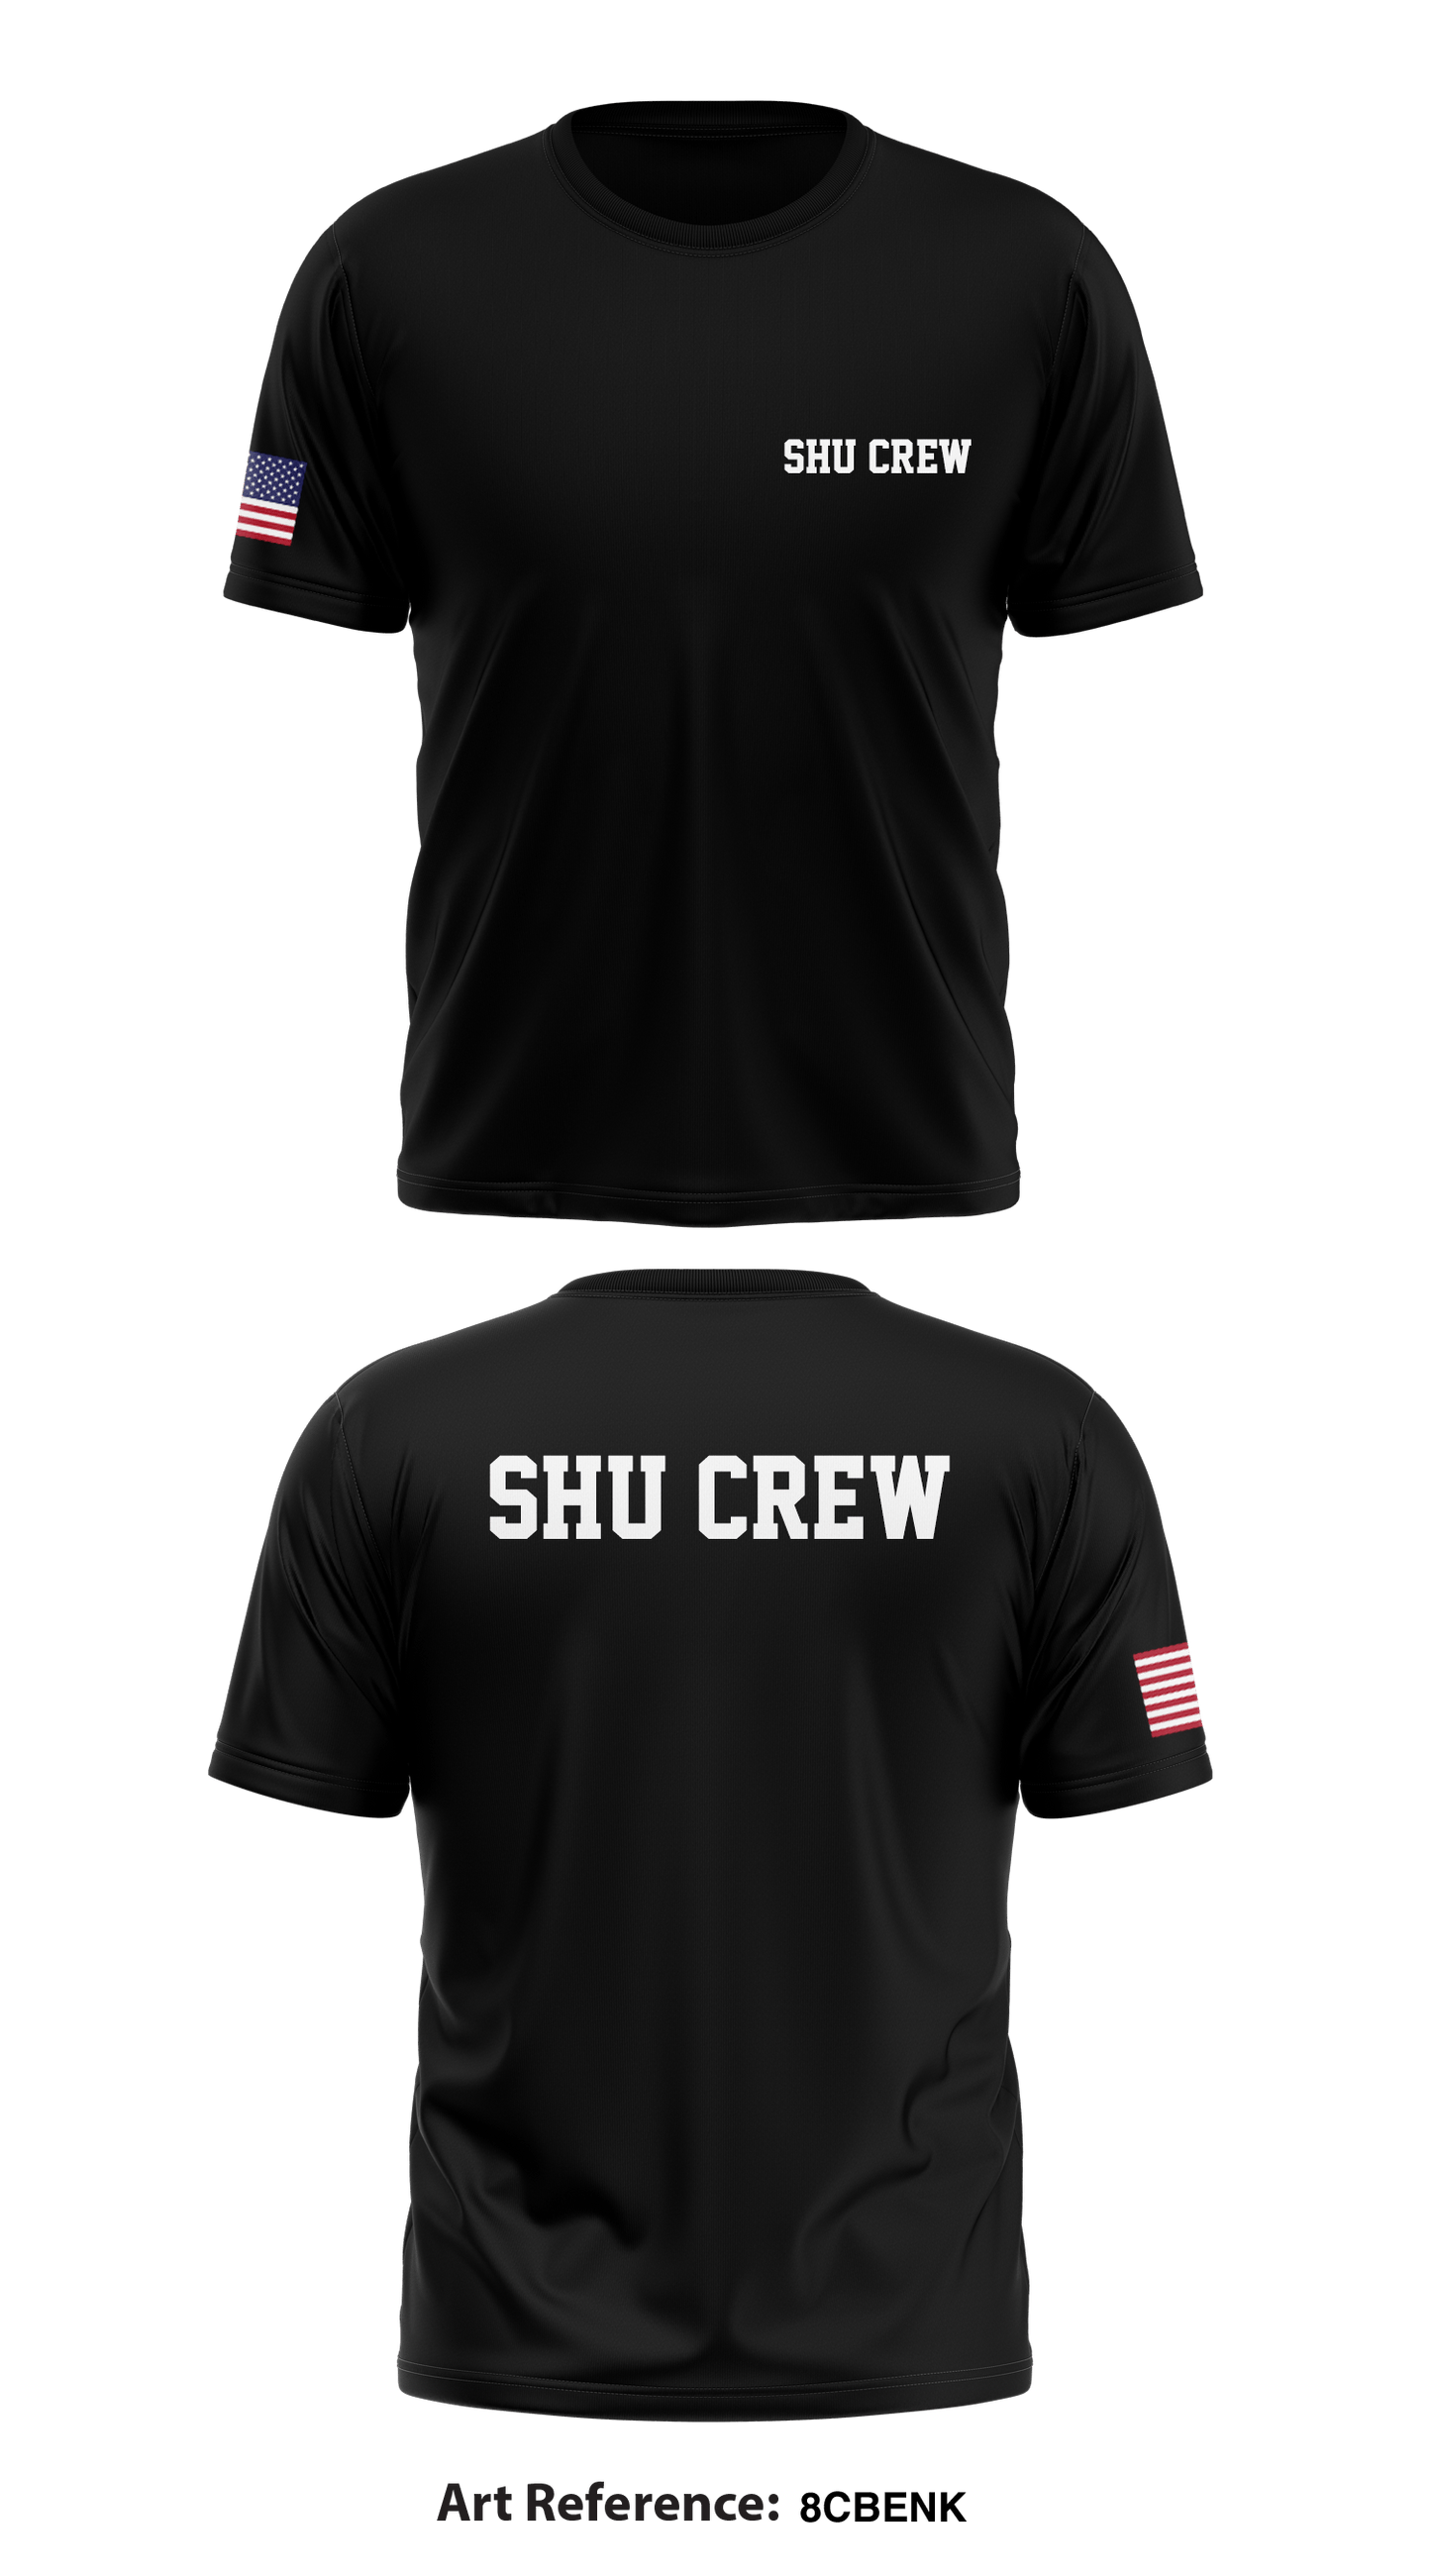 SHU CREW Store 1 Core Men's SS Performance Tee - 8cBEnk